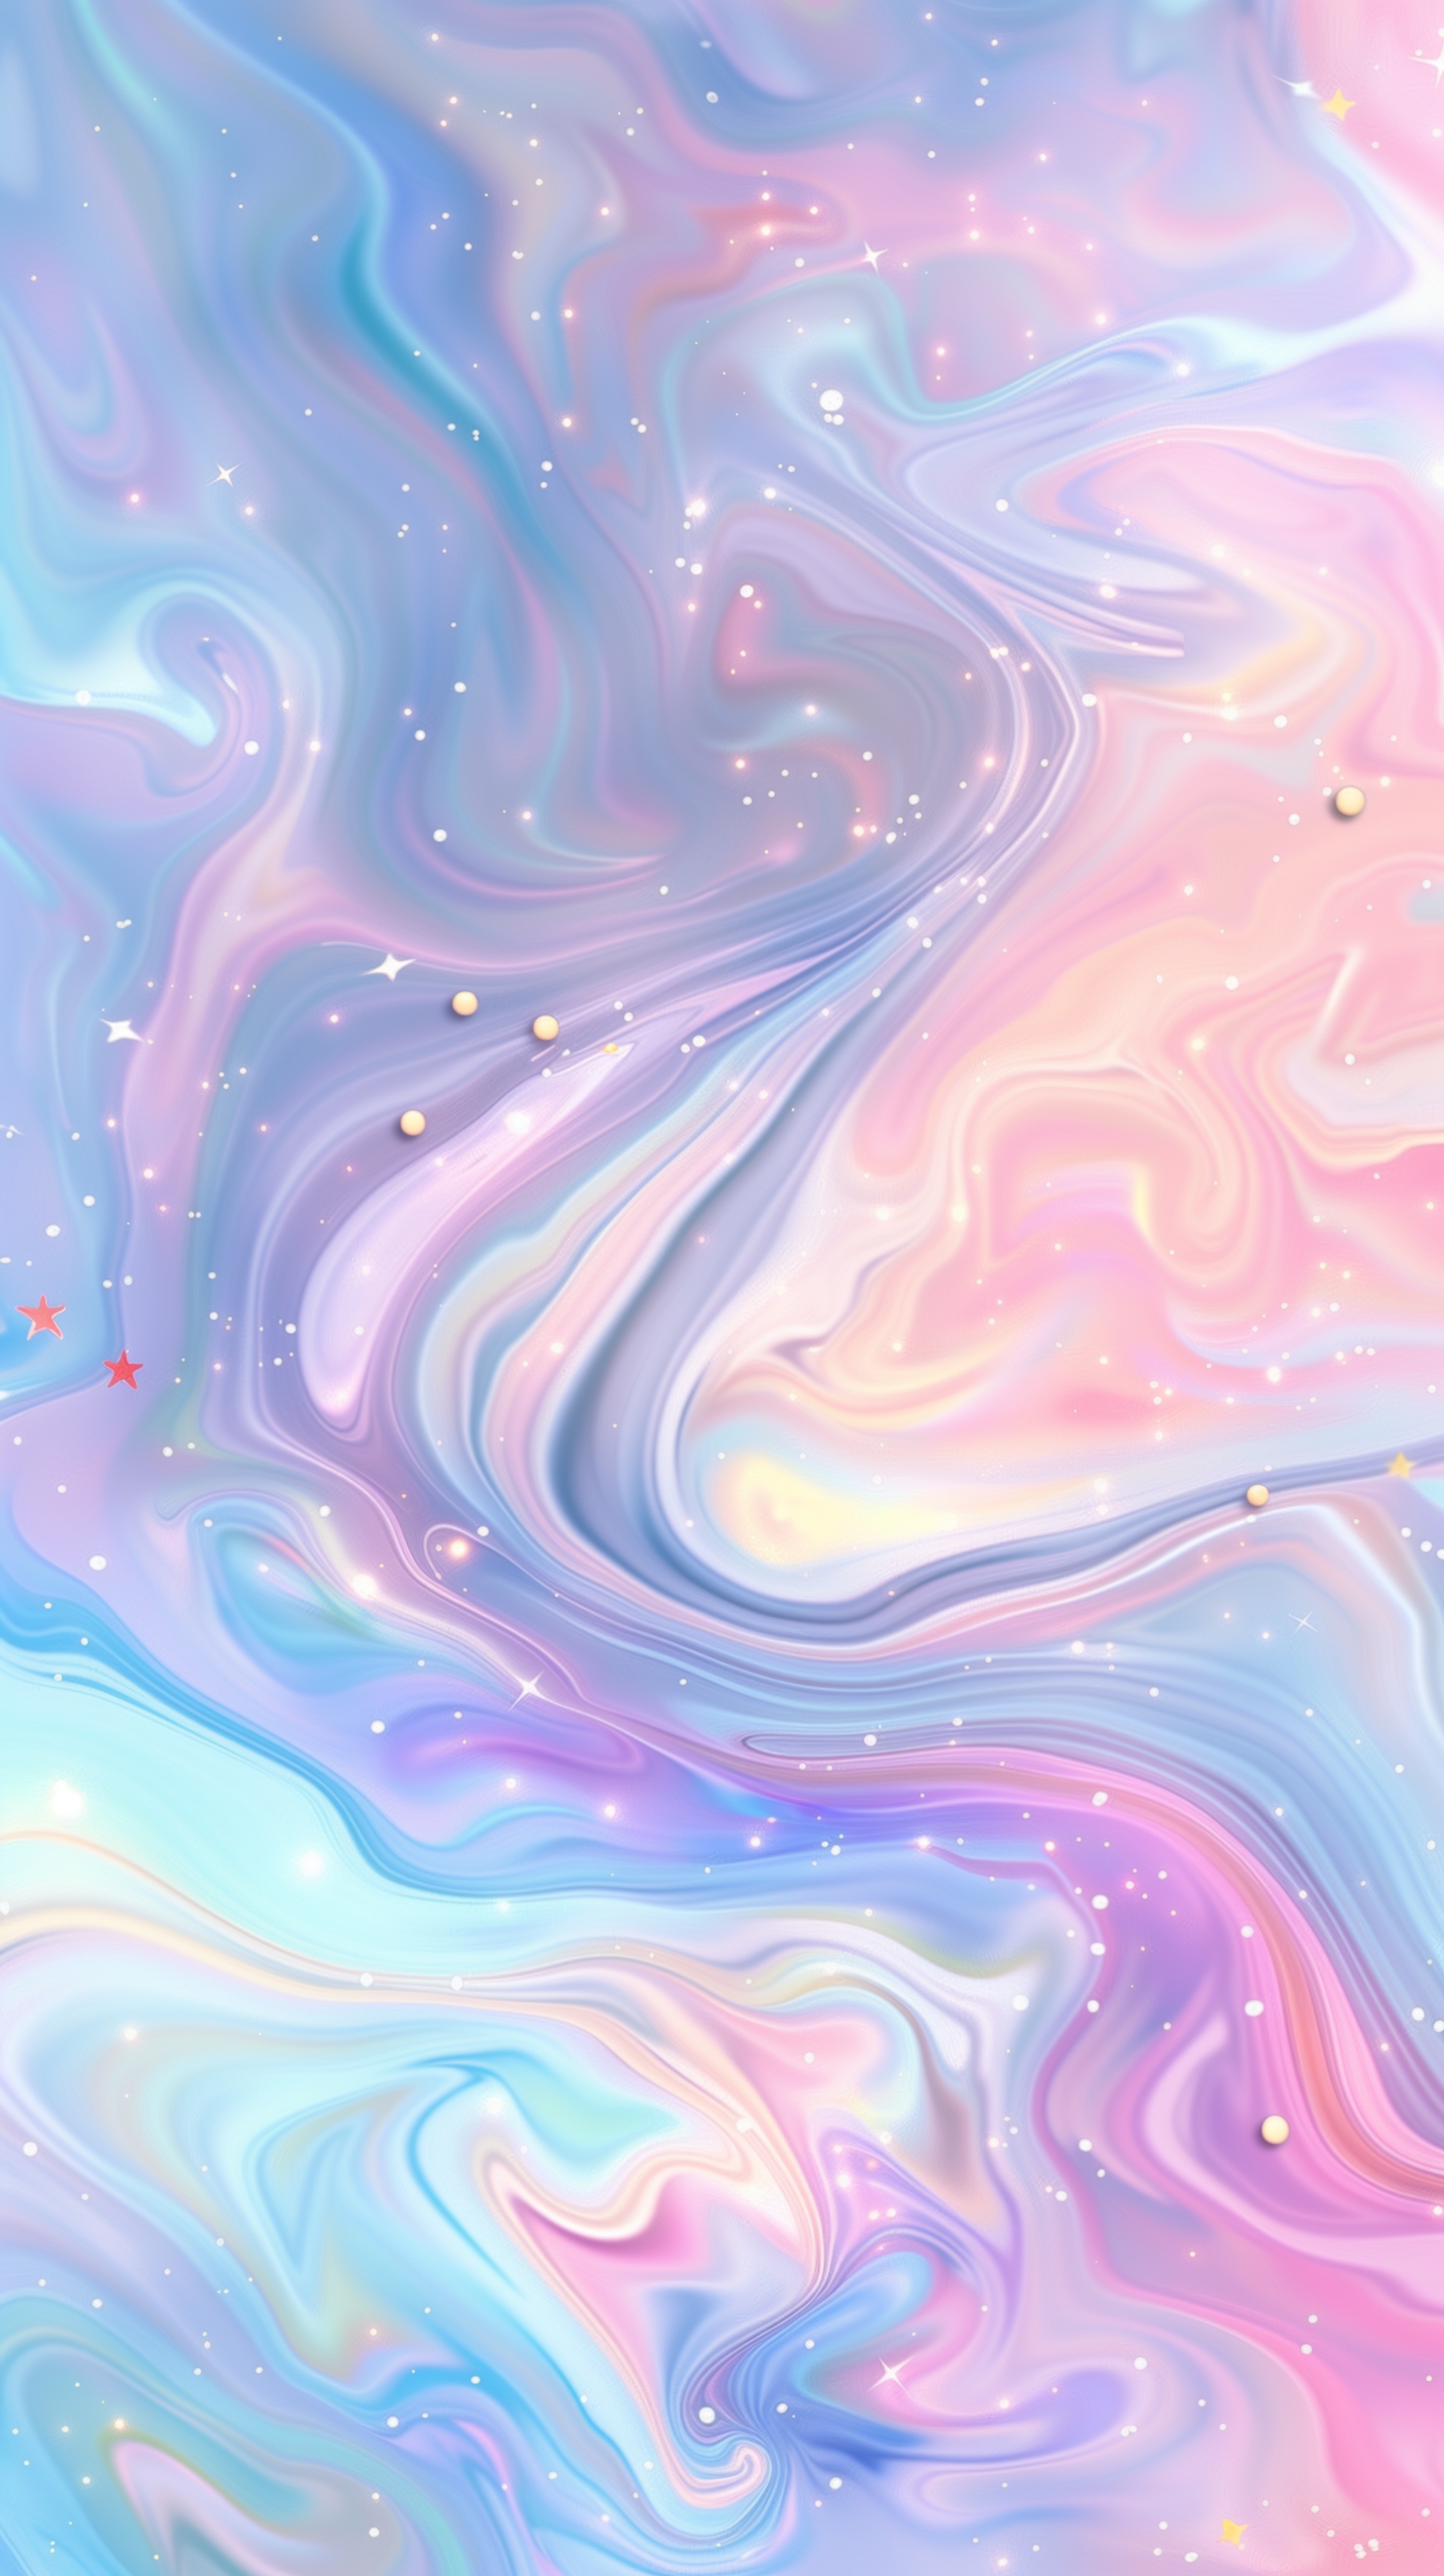 Swirling Pastel Galaxy with Stars Wallpaper[58935a042c3f47169f40]